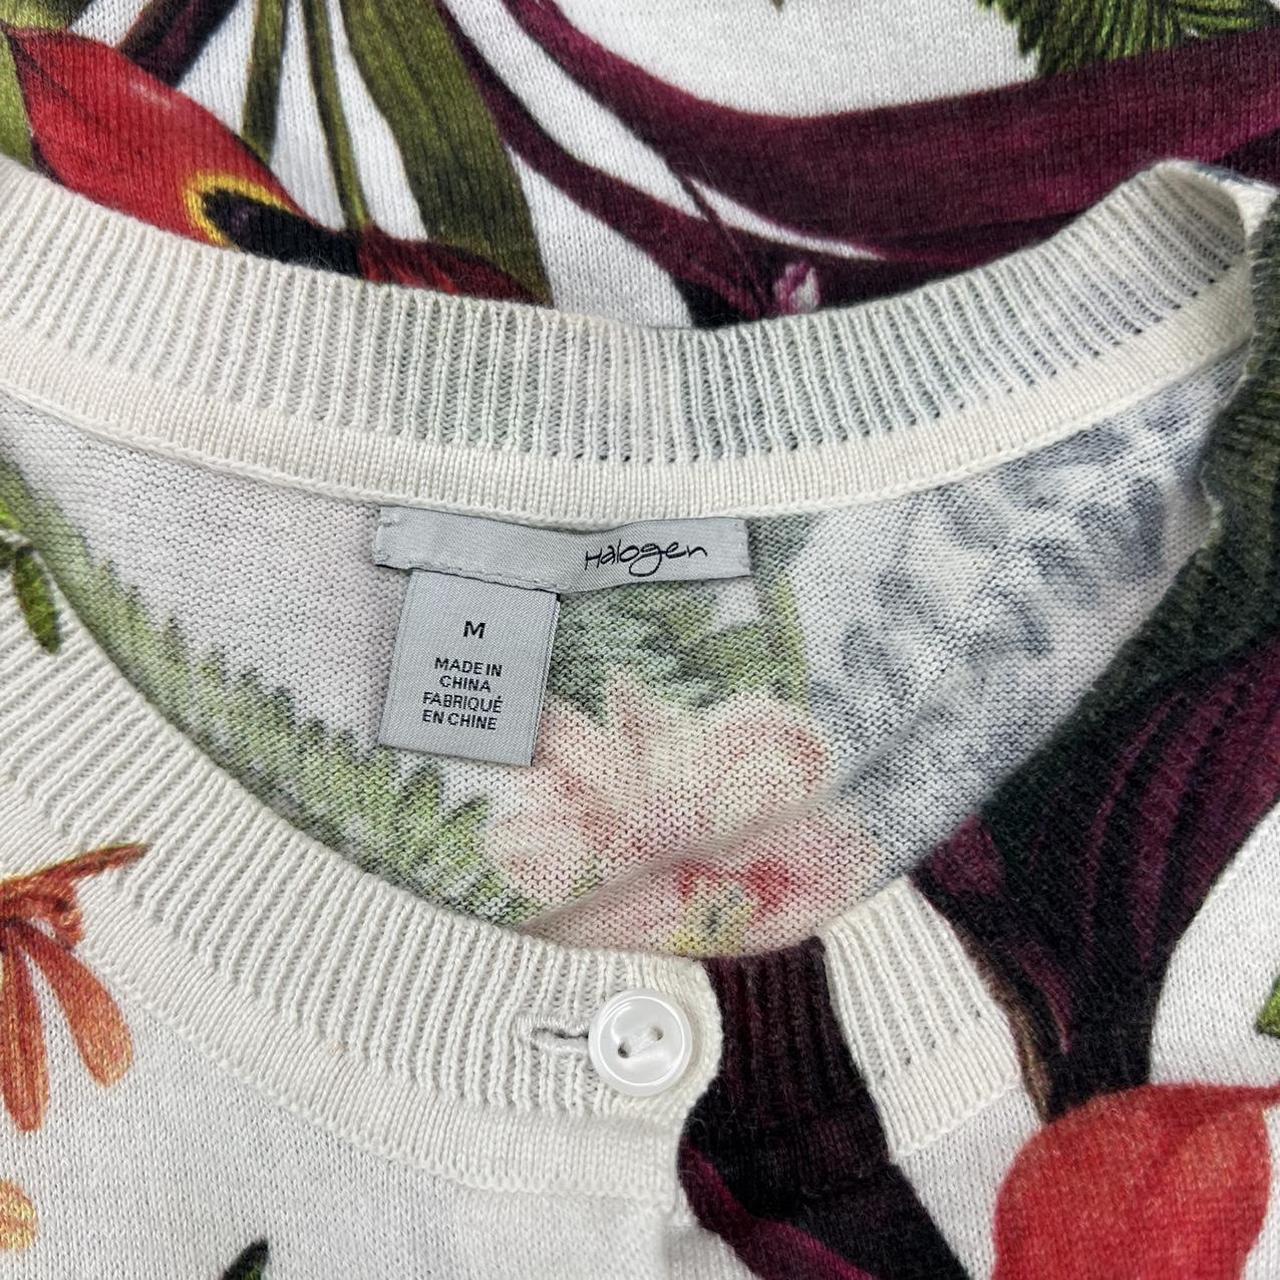 Product Image 4 - Halogen Flower Cardigan

◾️ Size: M